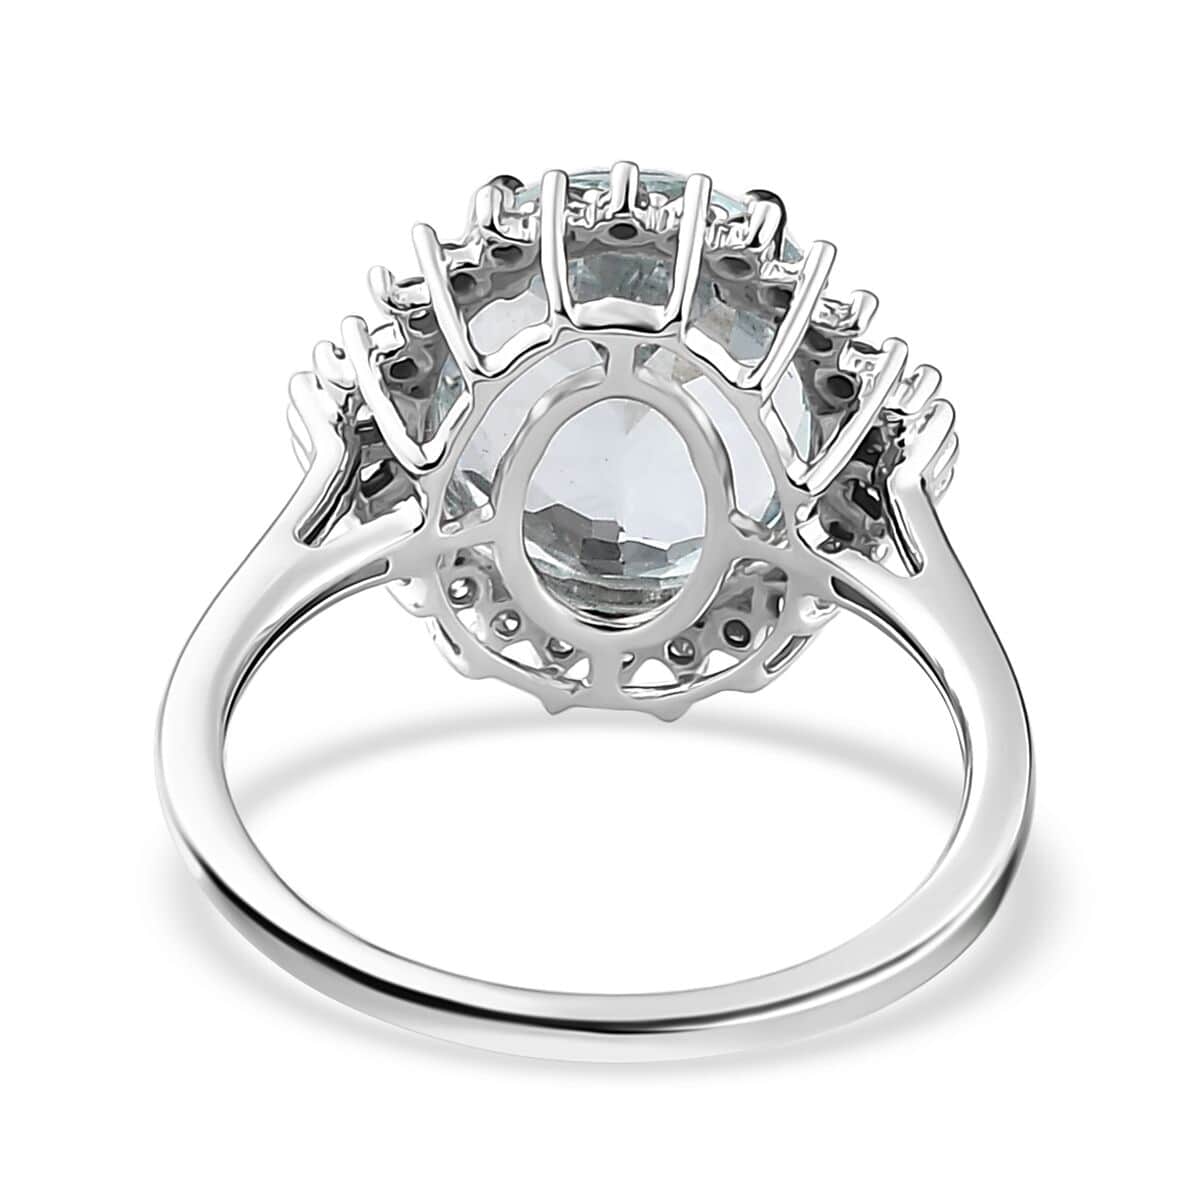 Luxoro 10K White Gold Premium Mangoro Aquamarine and Diamond Halo Ring (Size 9.0) 4.40 ctw image number 4